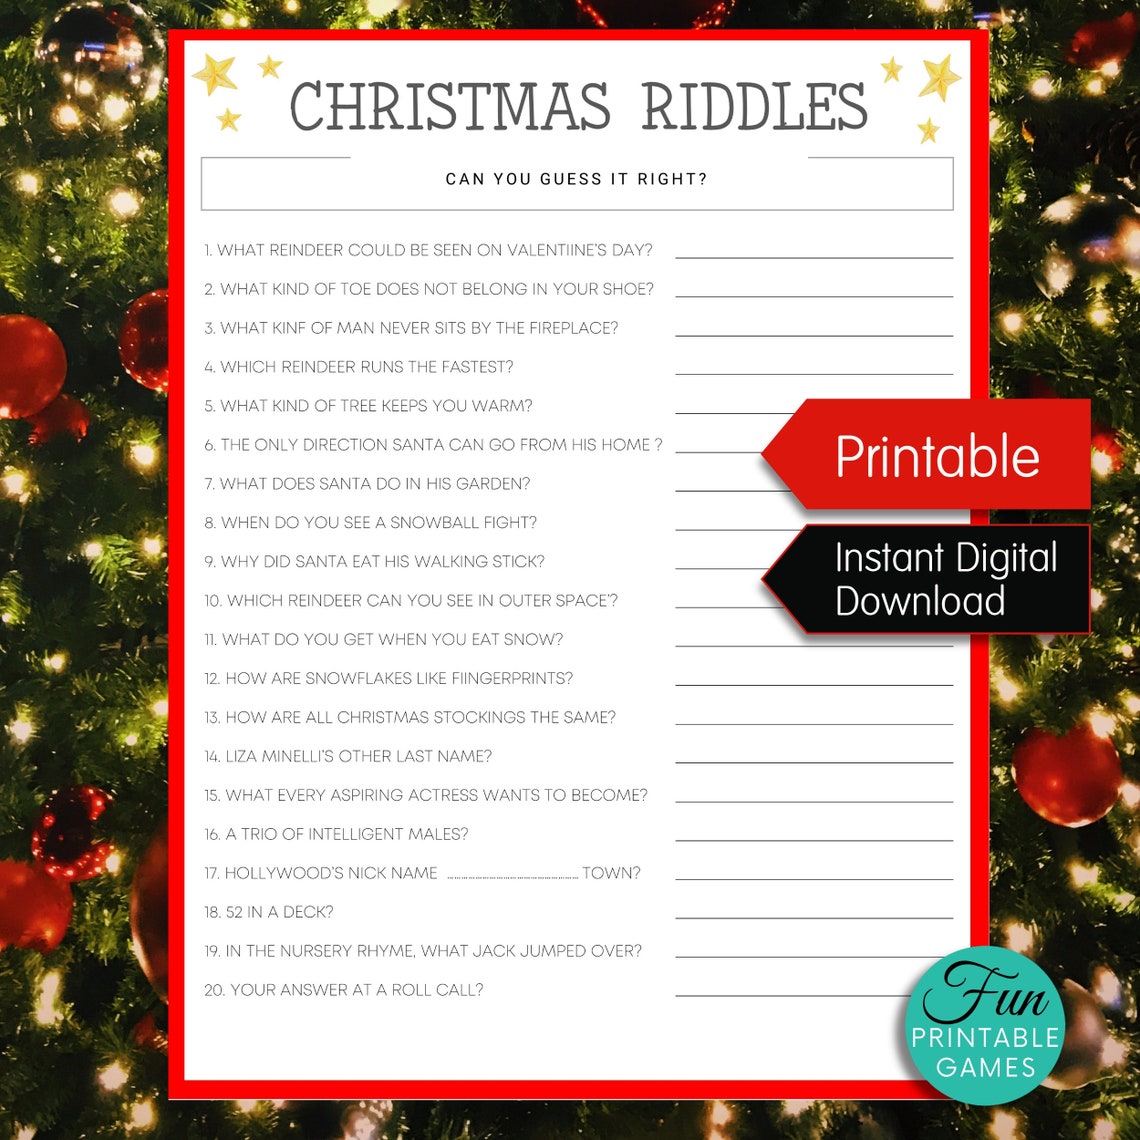 Printable Christmas Riddles - prntbl.concejomunicipaldechinu.gov.co